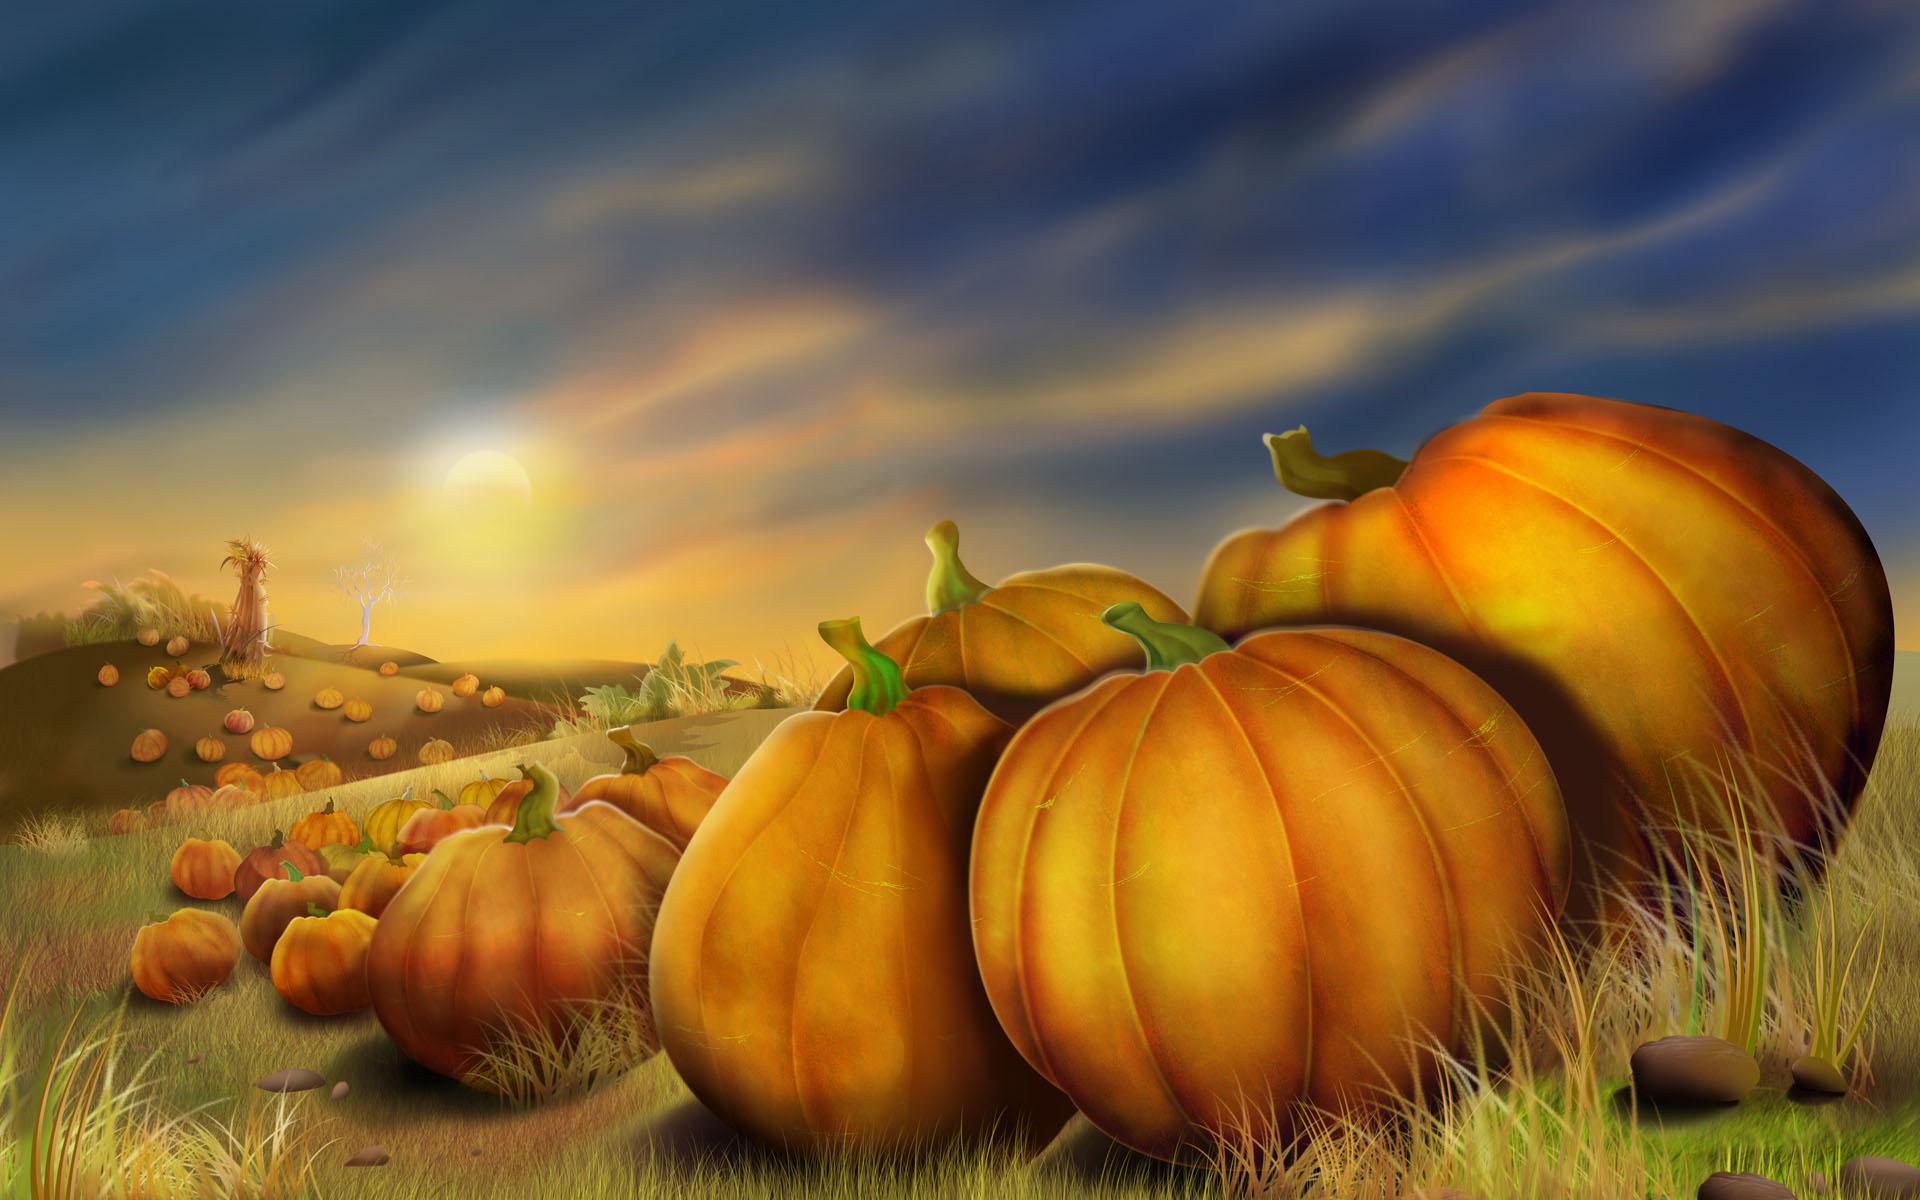 nature, pumpkins - desktop wallpaper